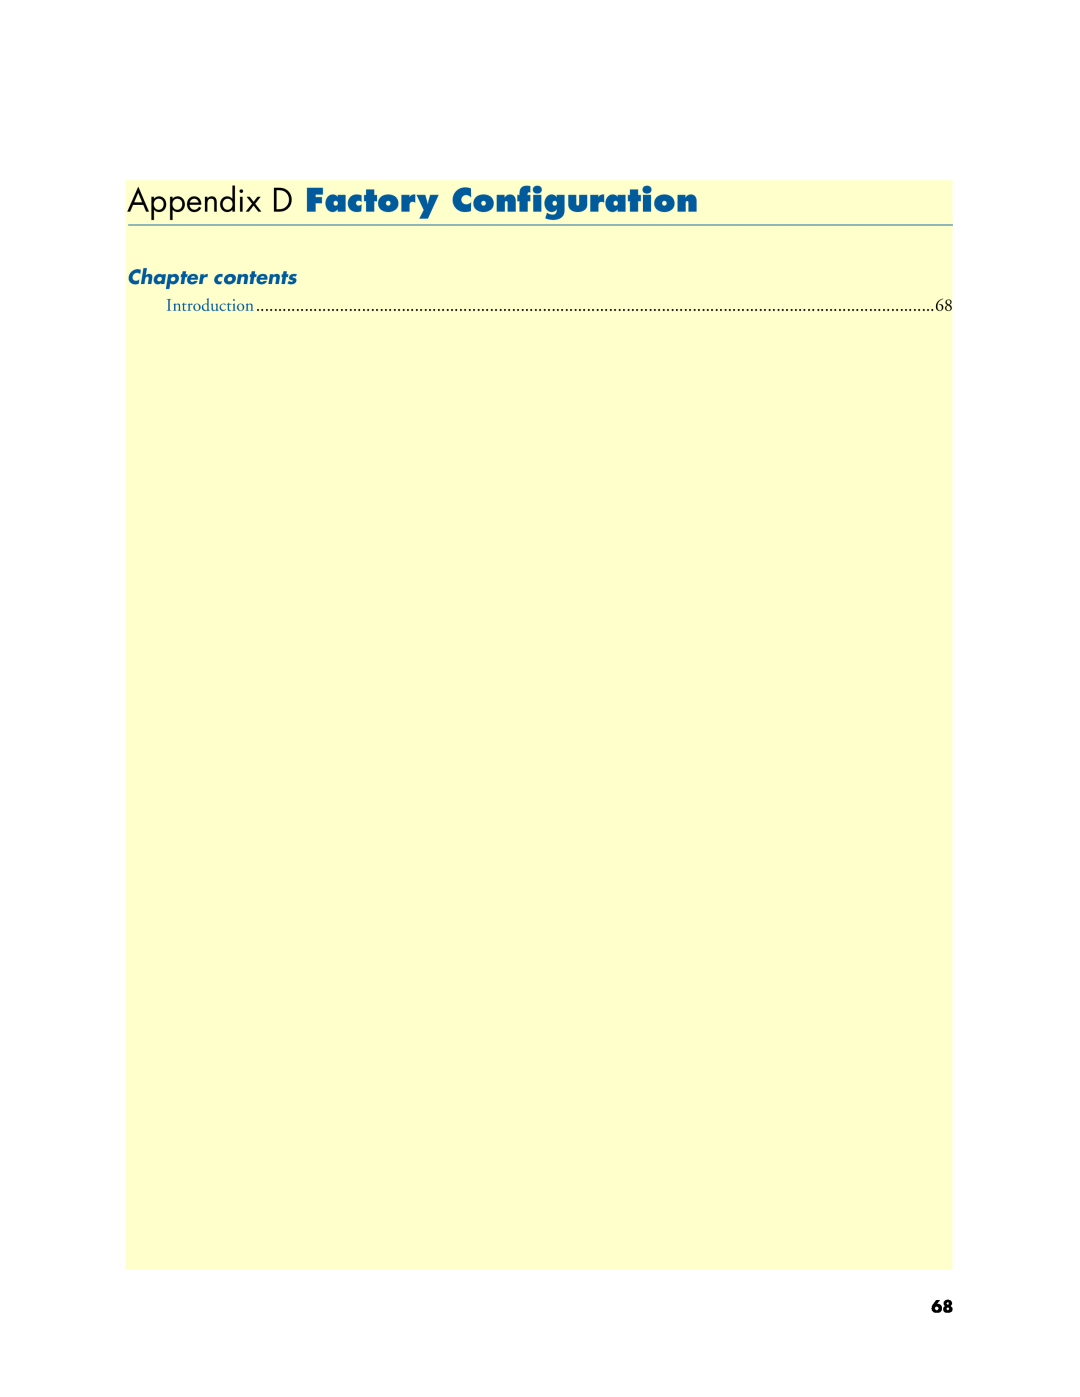 Patton electronic 4900 user manual Appendix D Factory Configuration, Chapter contents 